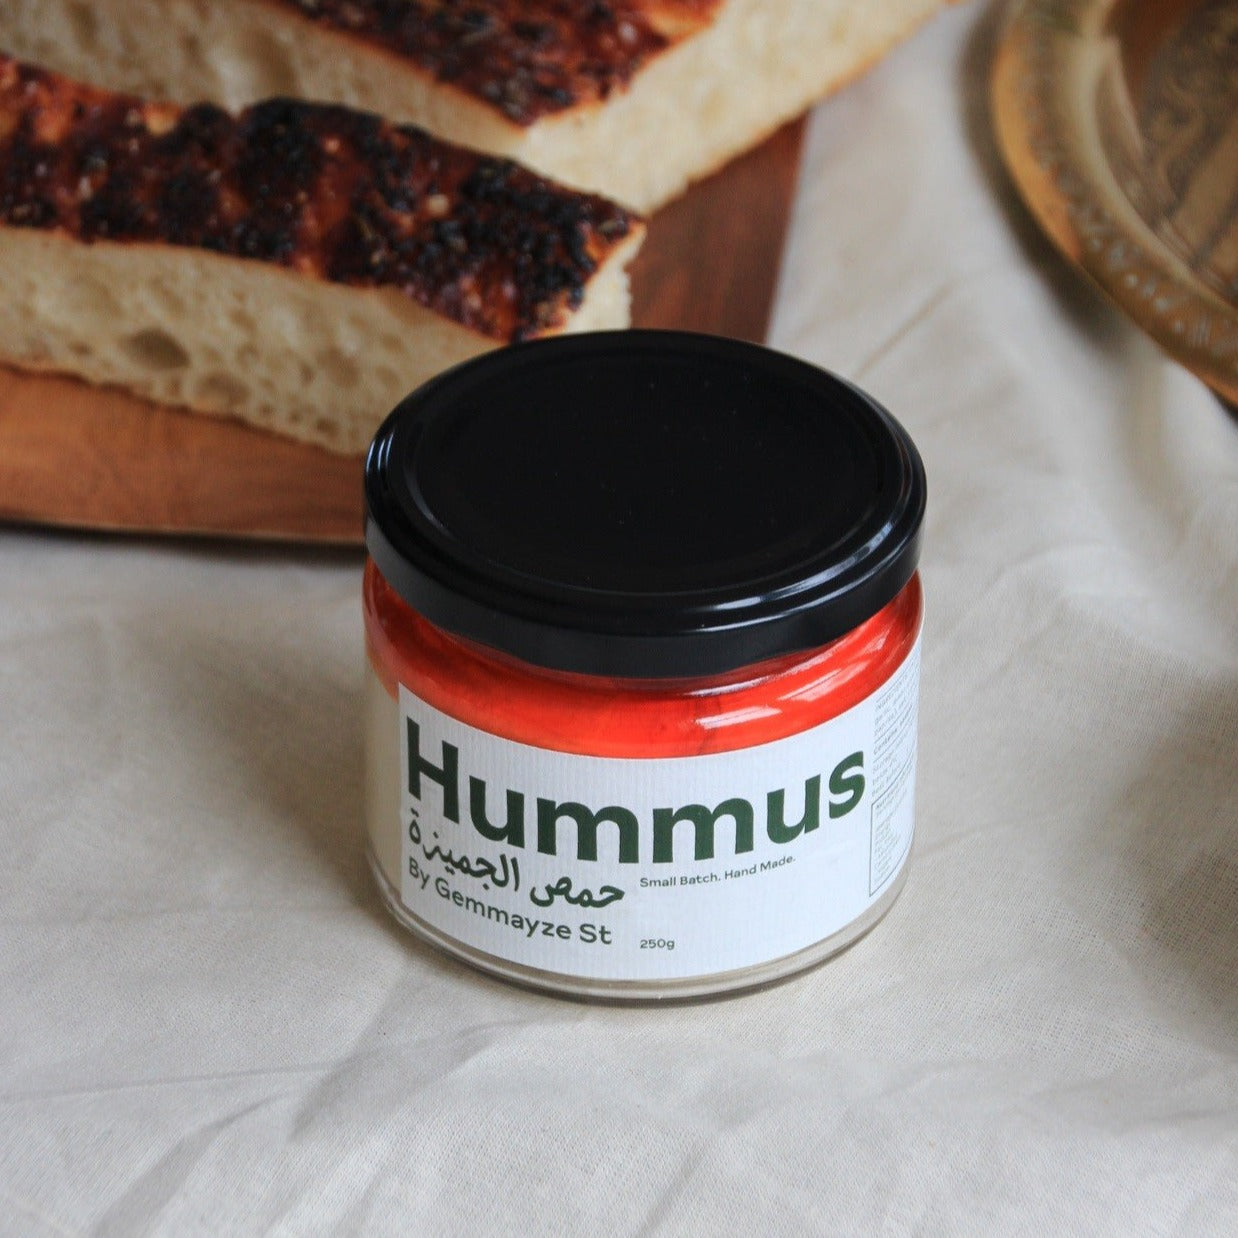 Gemmayze Street Hummus